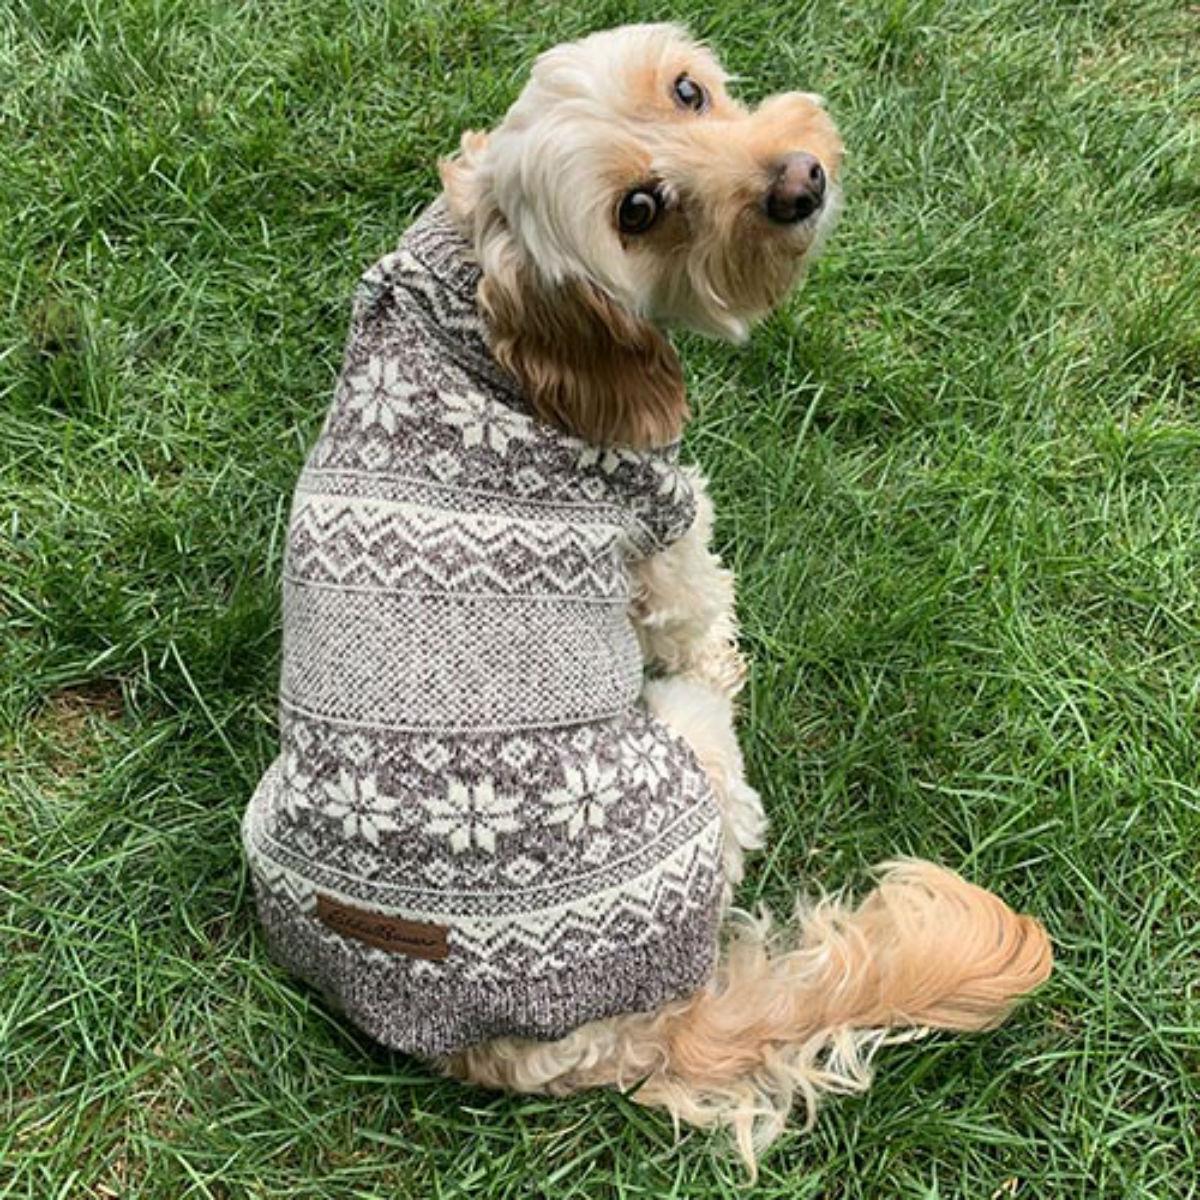 Eddie Bauer Legend Snowflake Dog Sweater - Oatmeal Heather